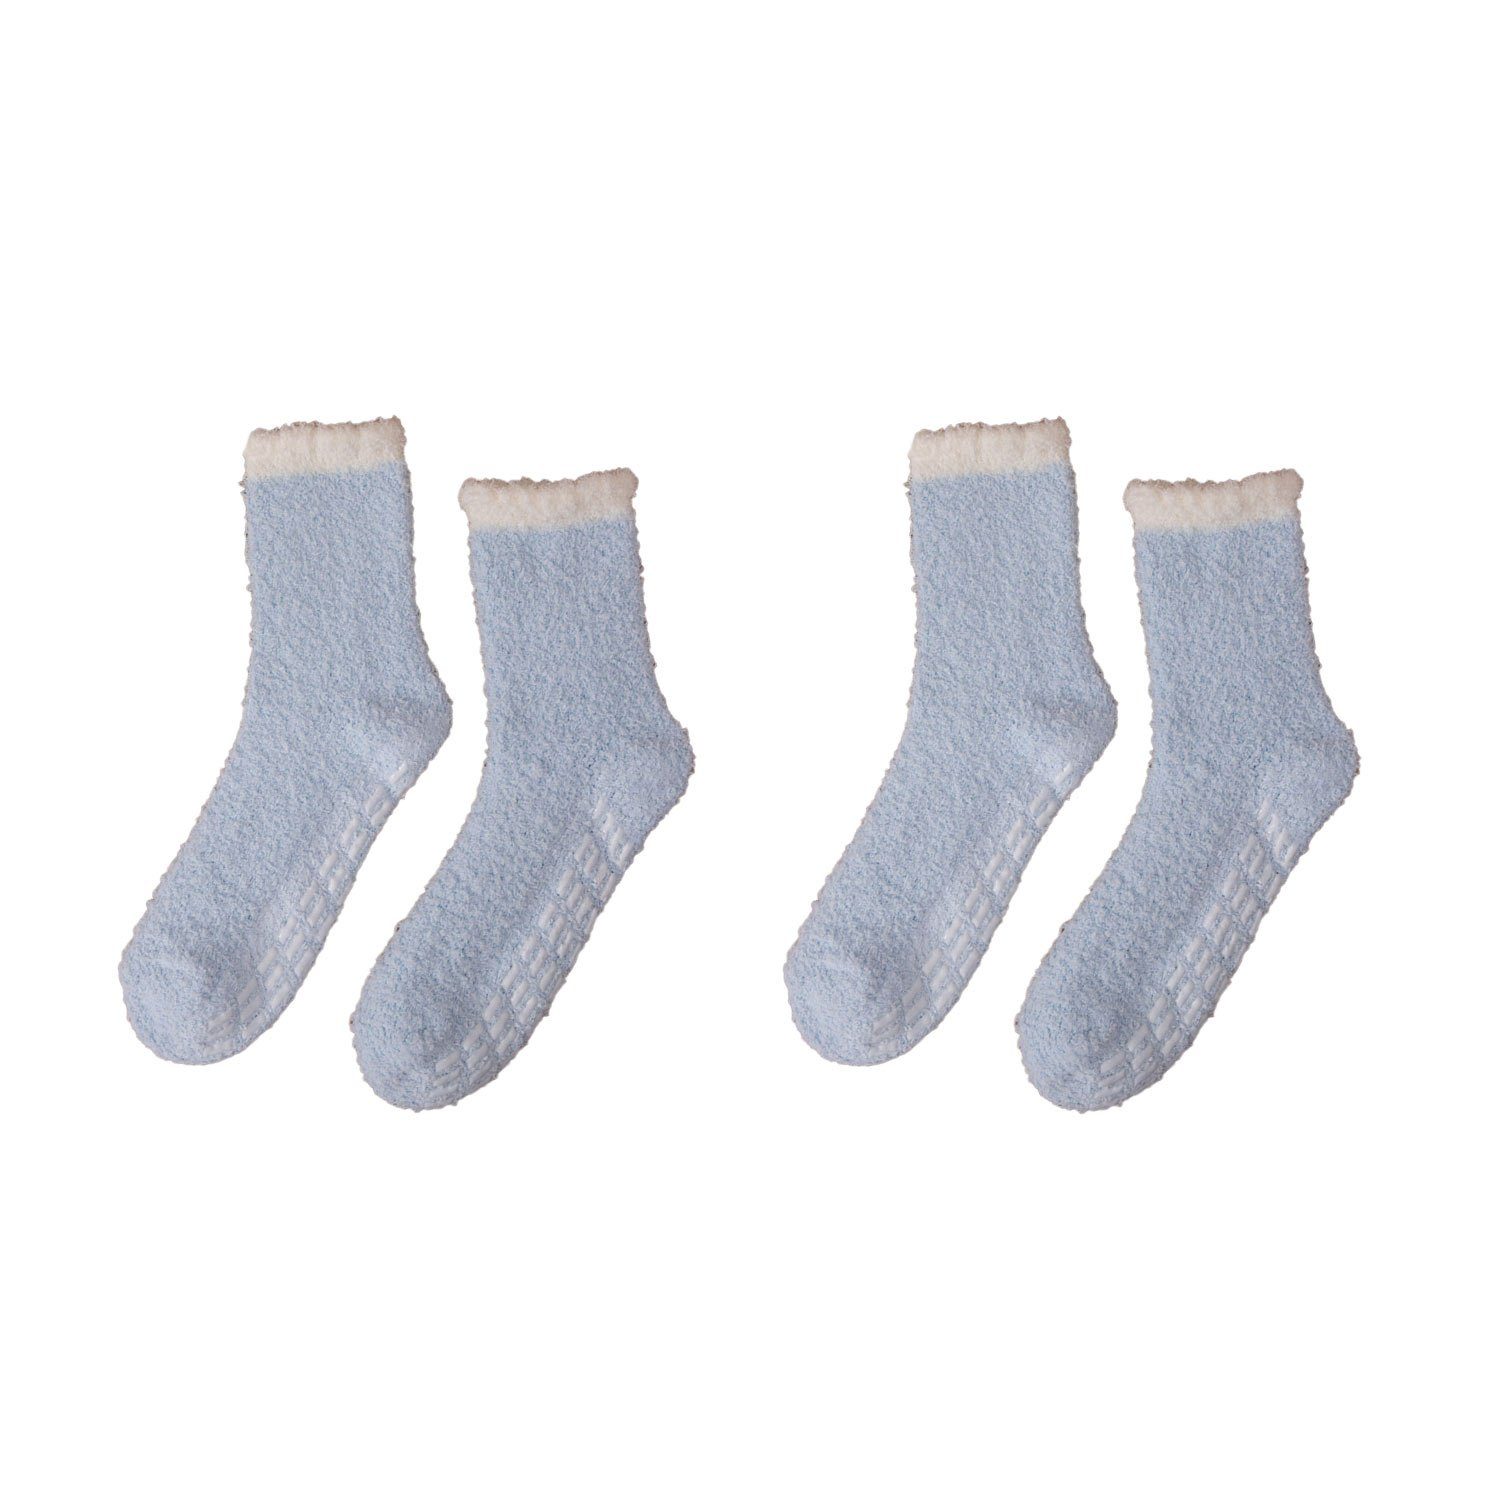 MAGICSHE Langsocken 2 Paare für Winter weiche flauschige Socken Rutschfeste und warme Fleece Socken hellblau